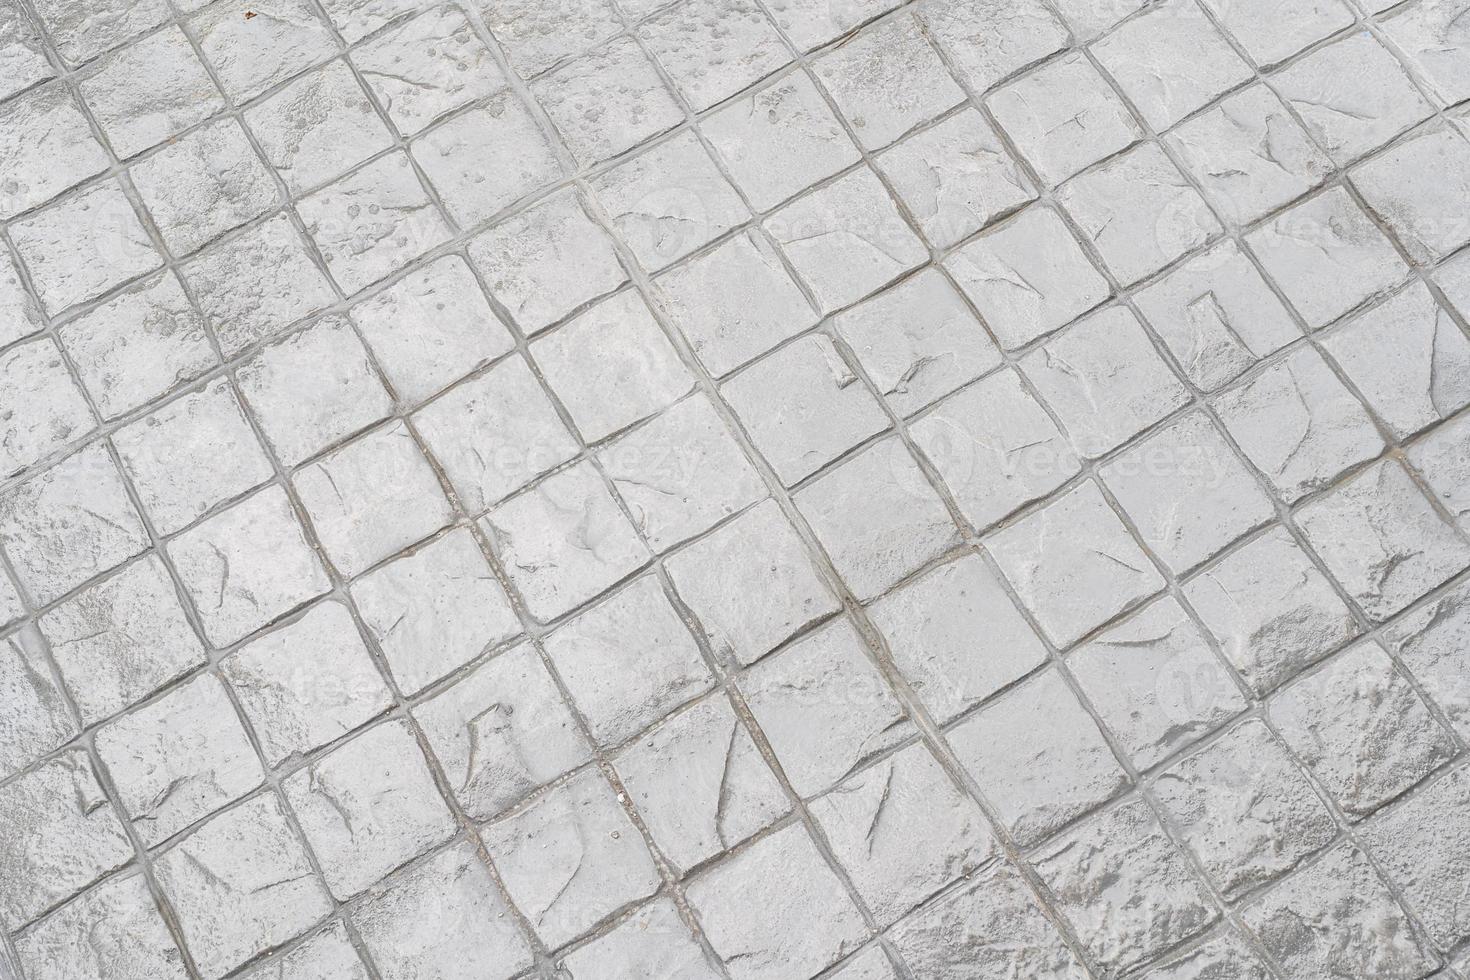 Granite cobblestoned pavement background. Stone pavement texture. Abstract background of cobblestone pavement. Rough textured surface of large gray paving slabs photo